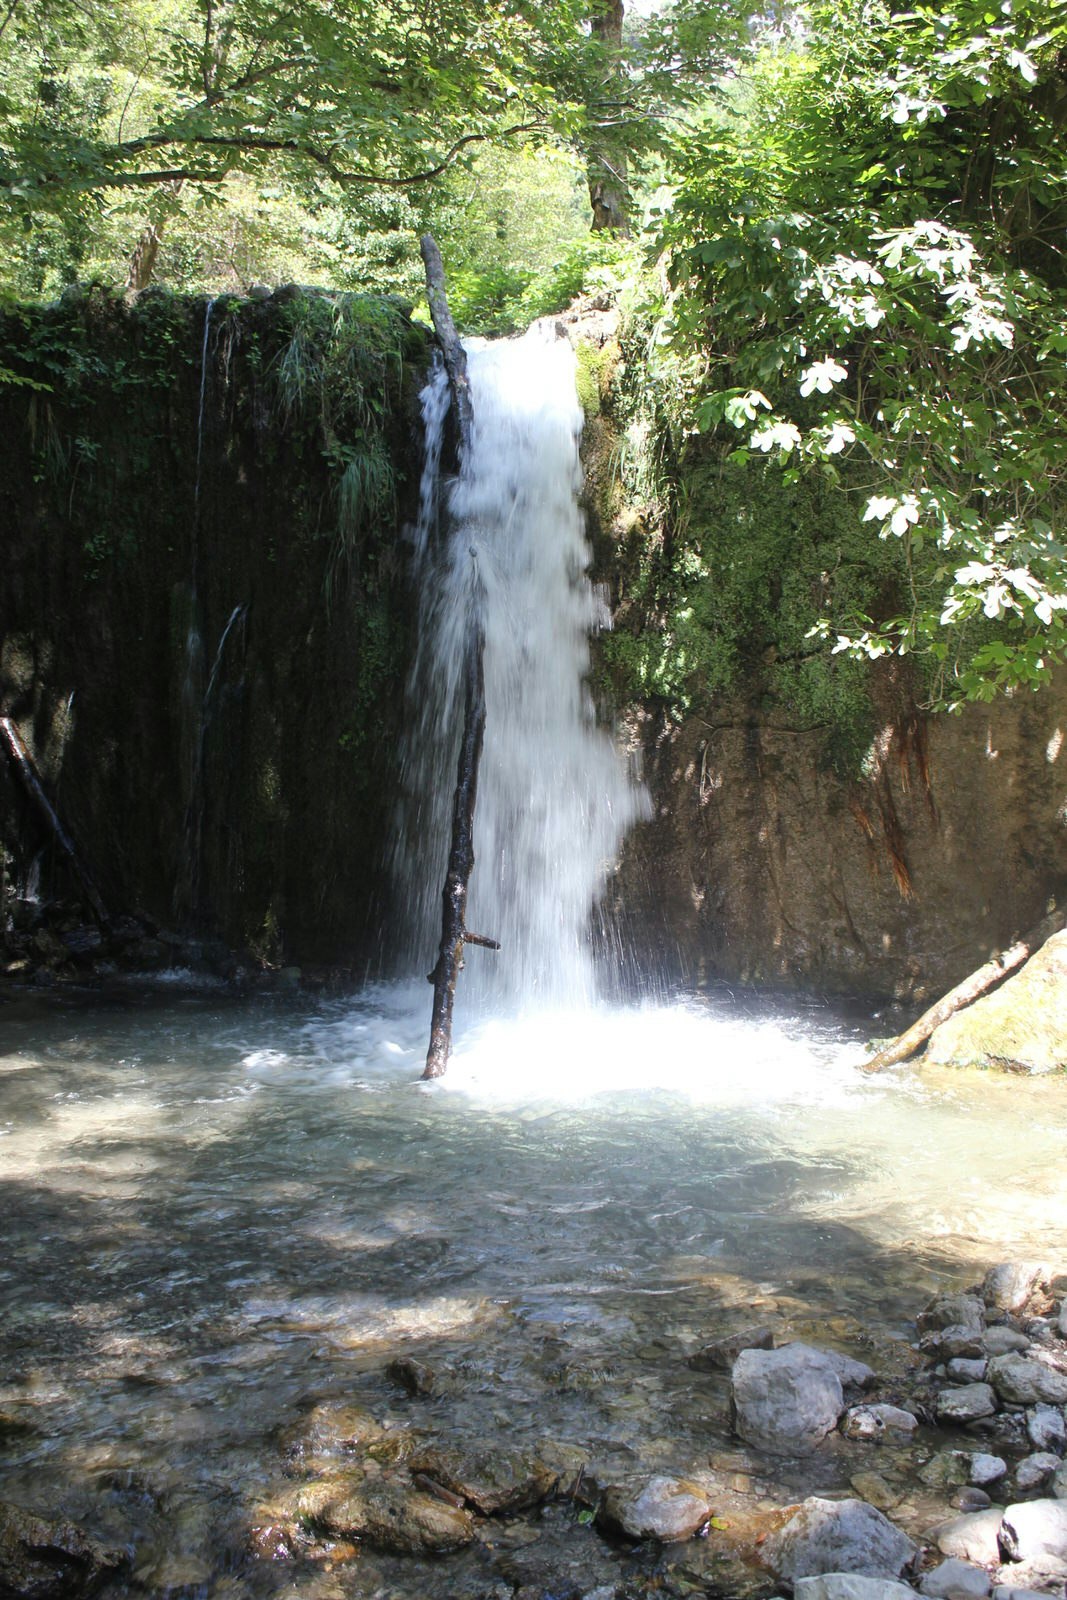 A gushing waterfall